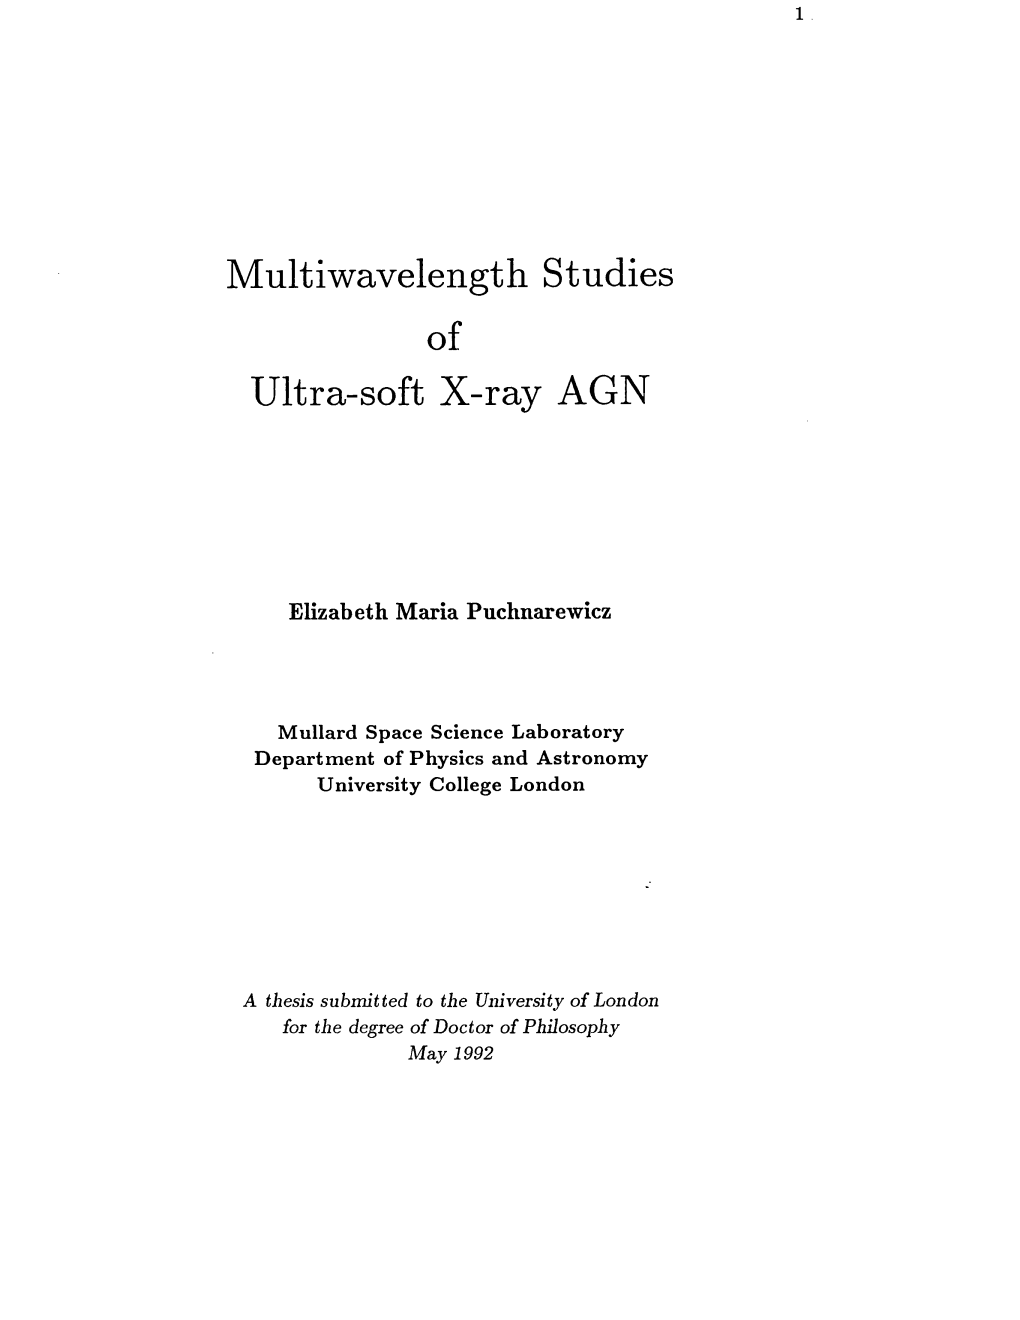 Multiwavelength Studies of Ultra-Soft X-Ray AGN